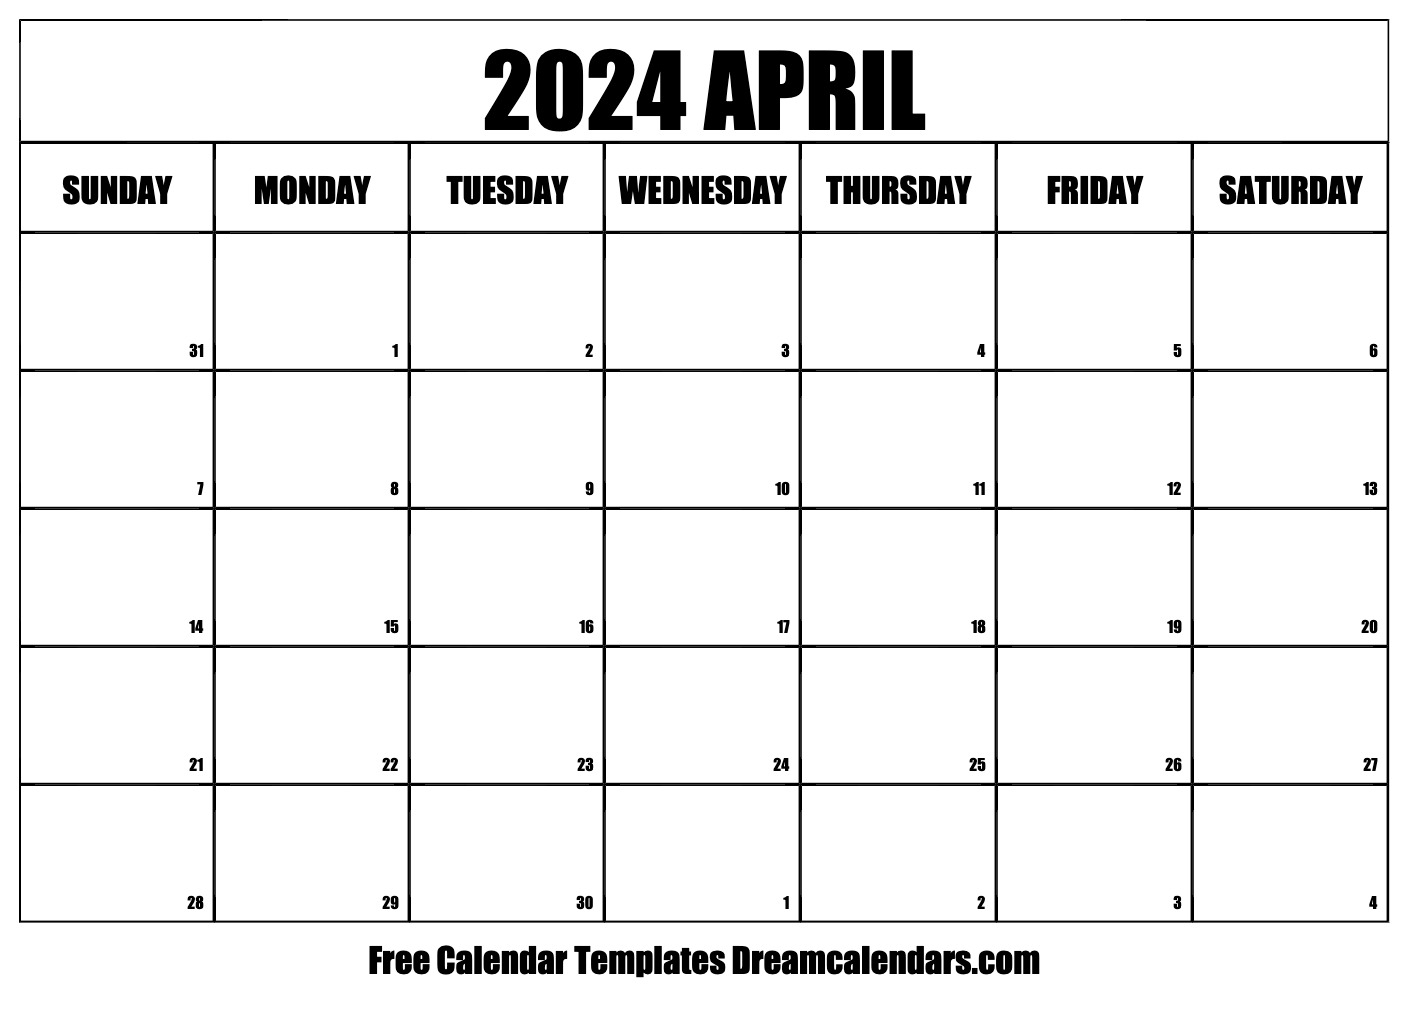 April 2024 Calendar | Free Blank Printable With Holidays throughout April 22 Calendar 2024